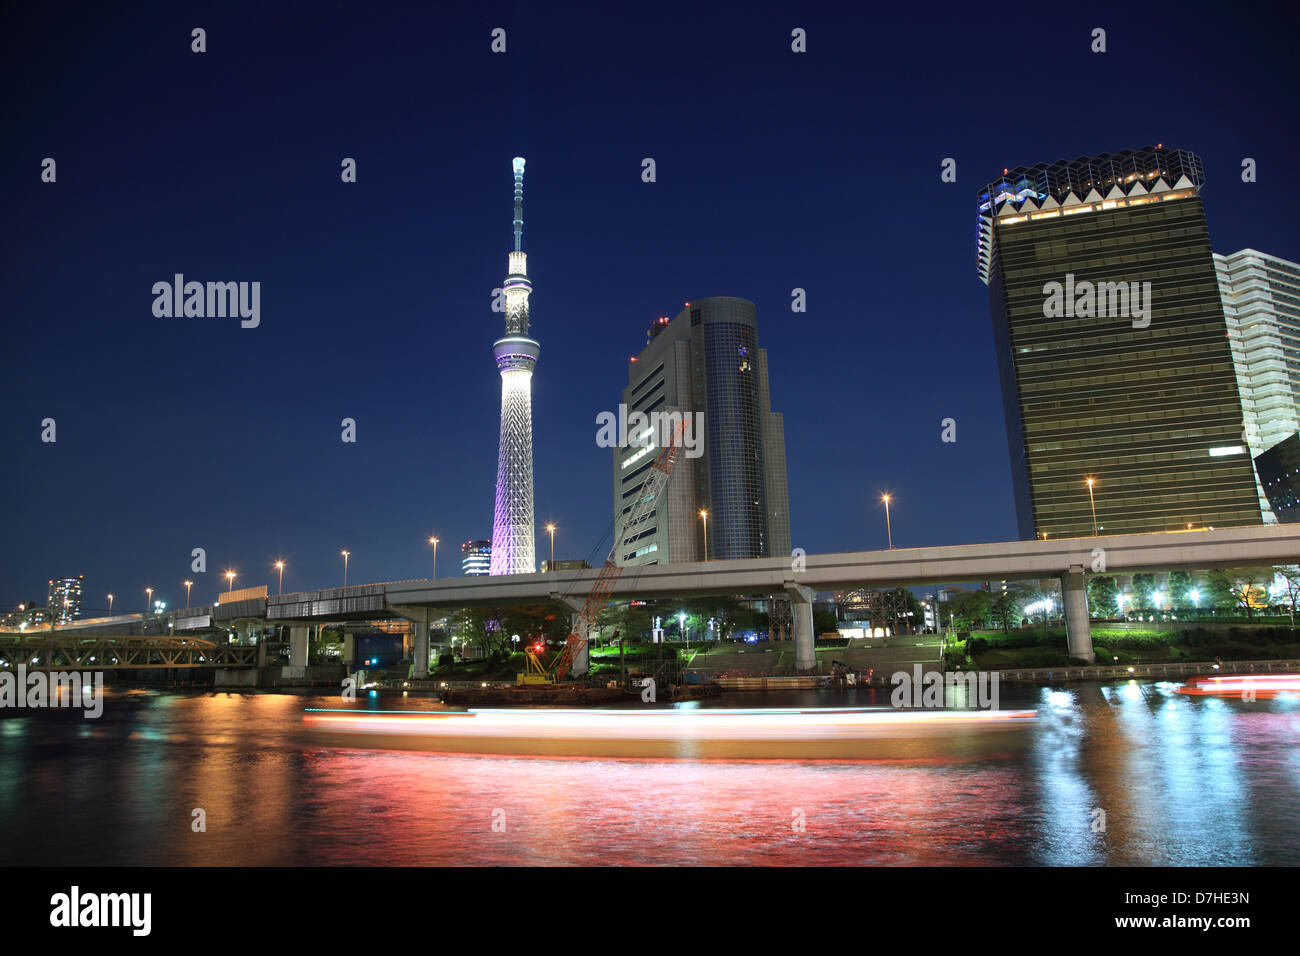 Japon, Tokyo, Sumida-ku, vue de la nuit de Tokyo Sky Tree (634 m) de la rivière Sumida Banque D'Images